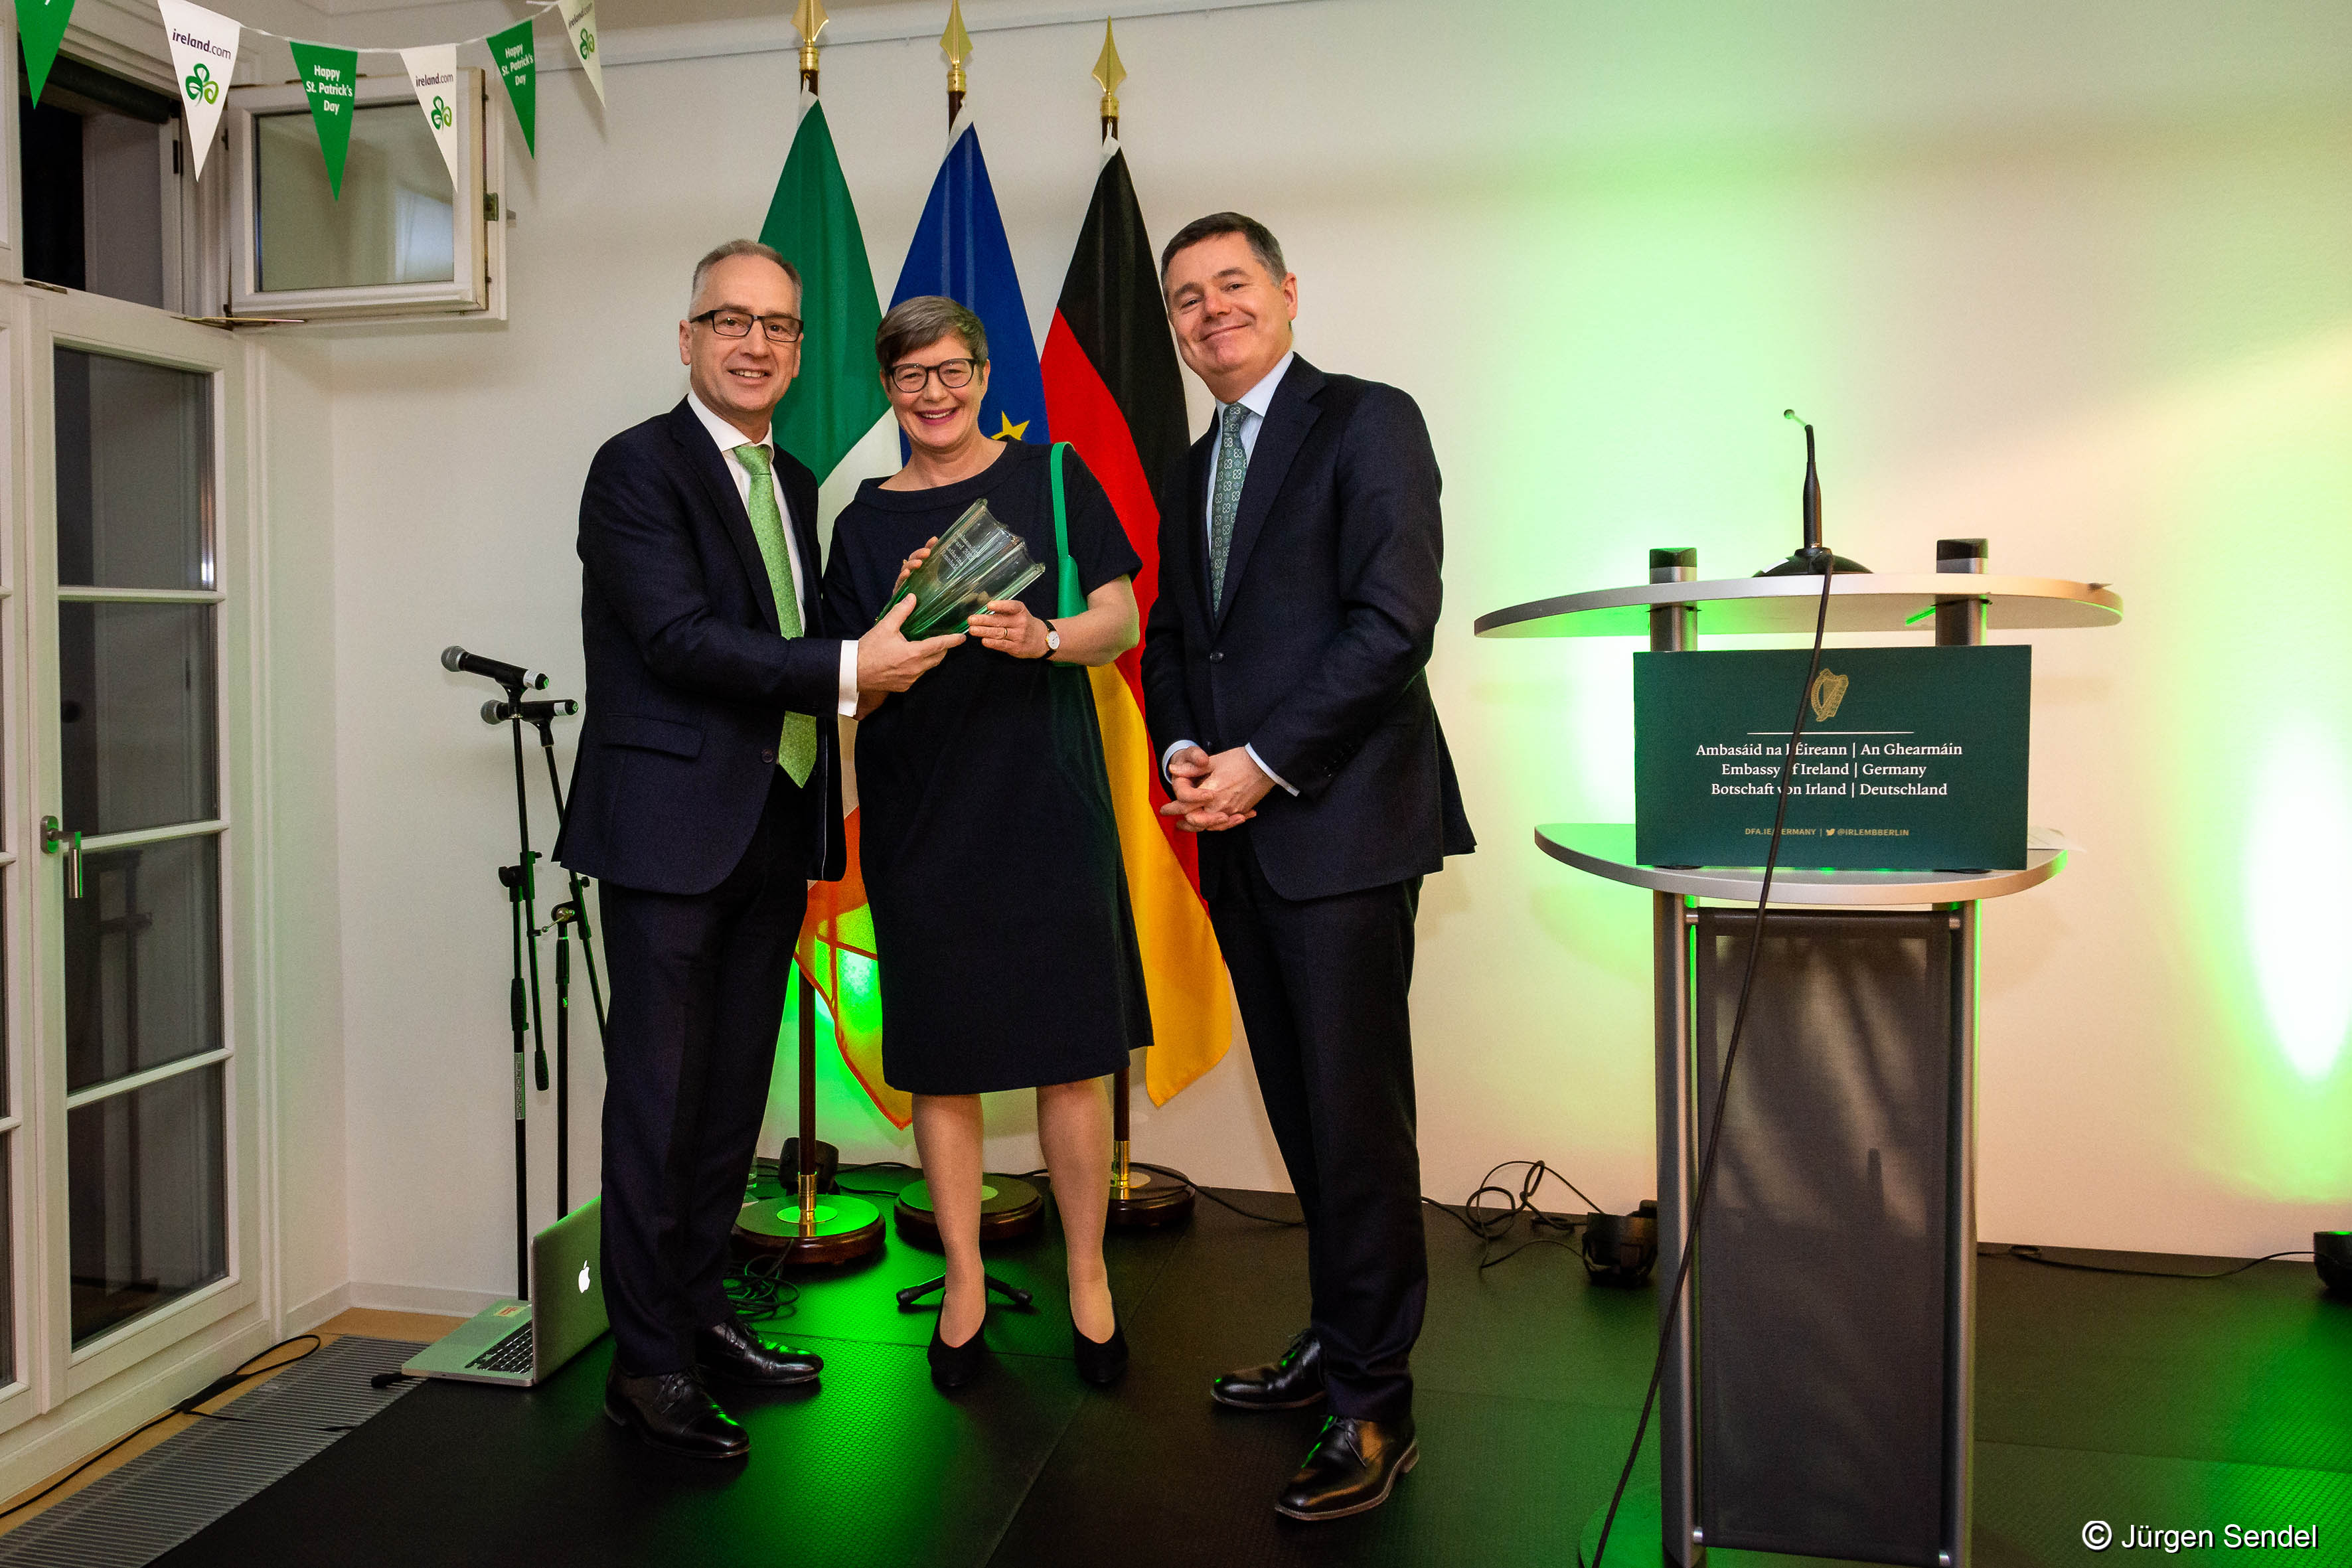 Prof. Dr. Katharina Rennhak Receives The Ambassador of Ireland – St. Patrick’s Day Award 